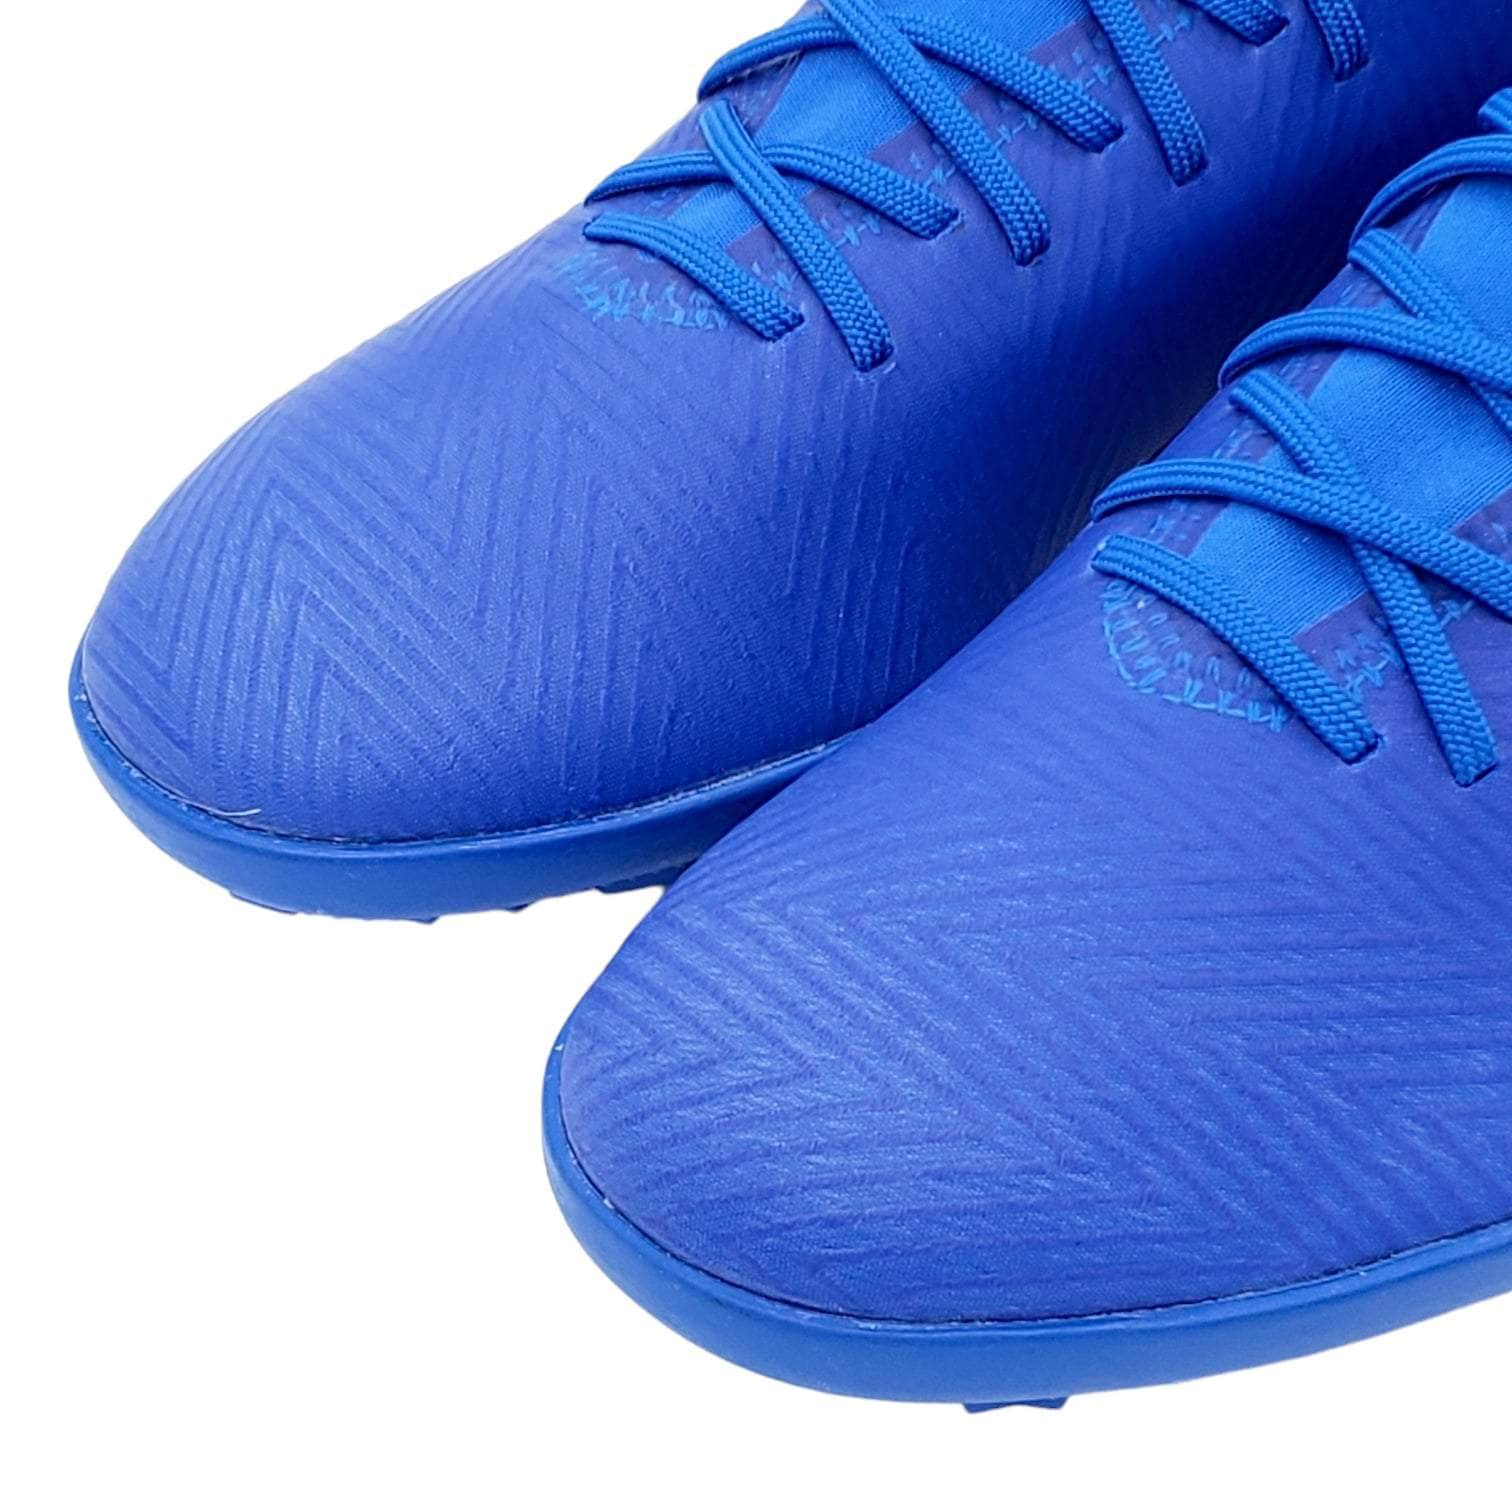 Adidas Nemeziz Blue Turf Football Shoes